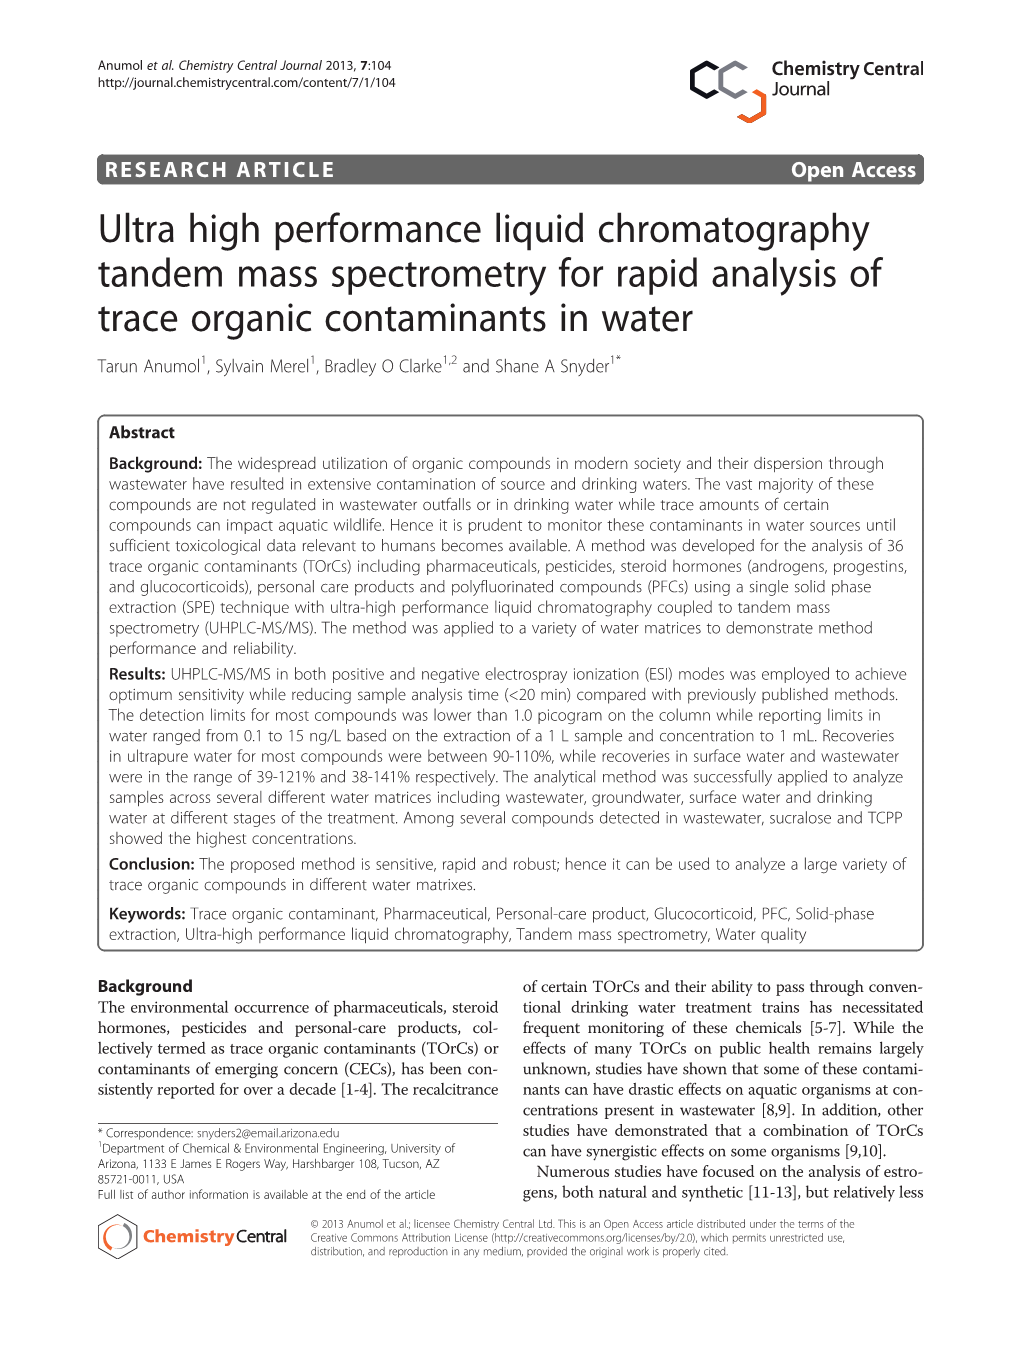 Ultra High Performance Liquid Chromatography